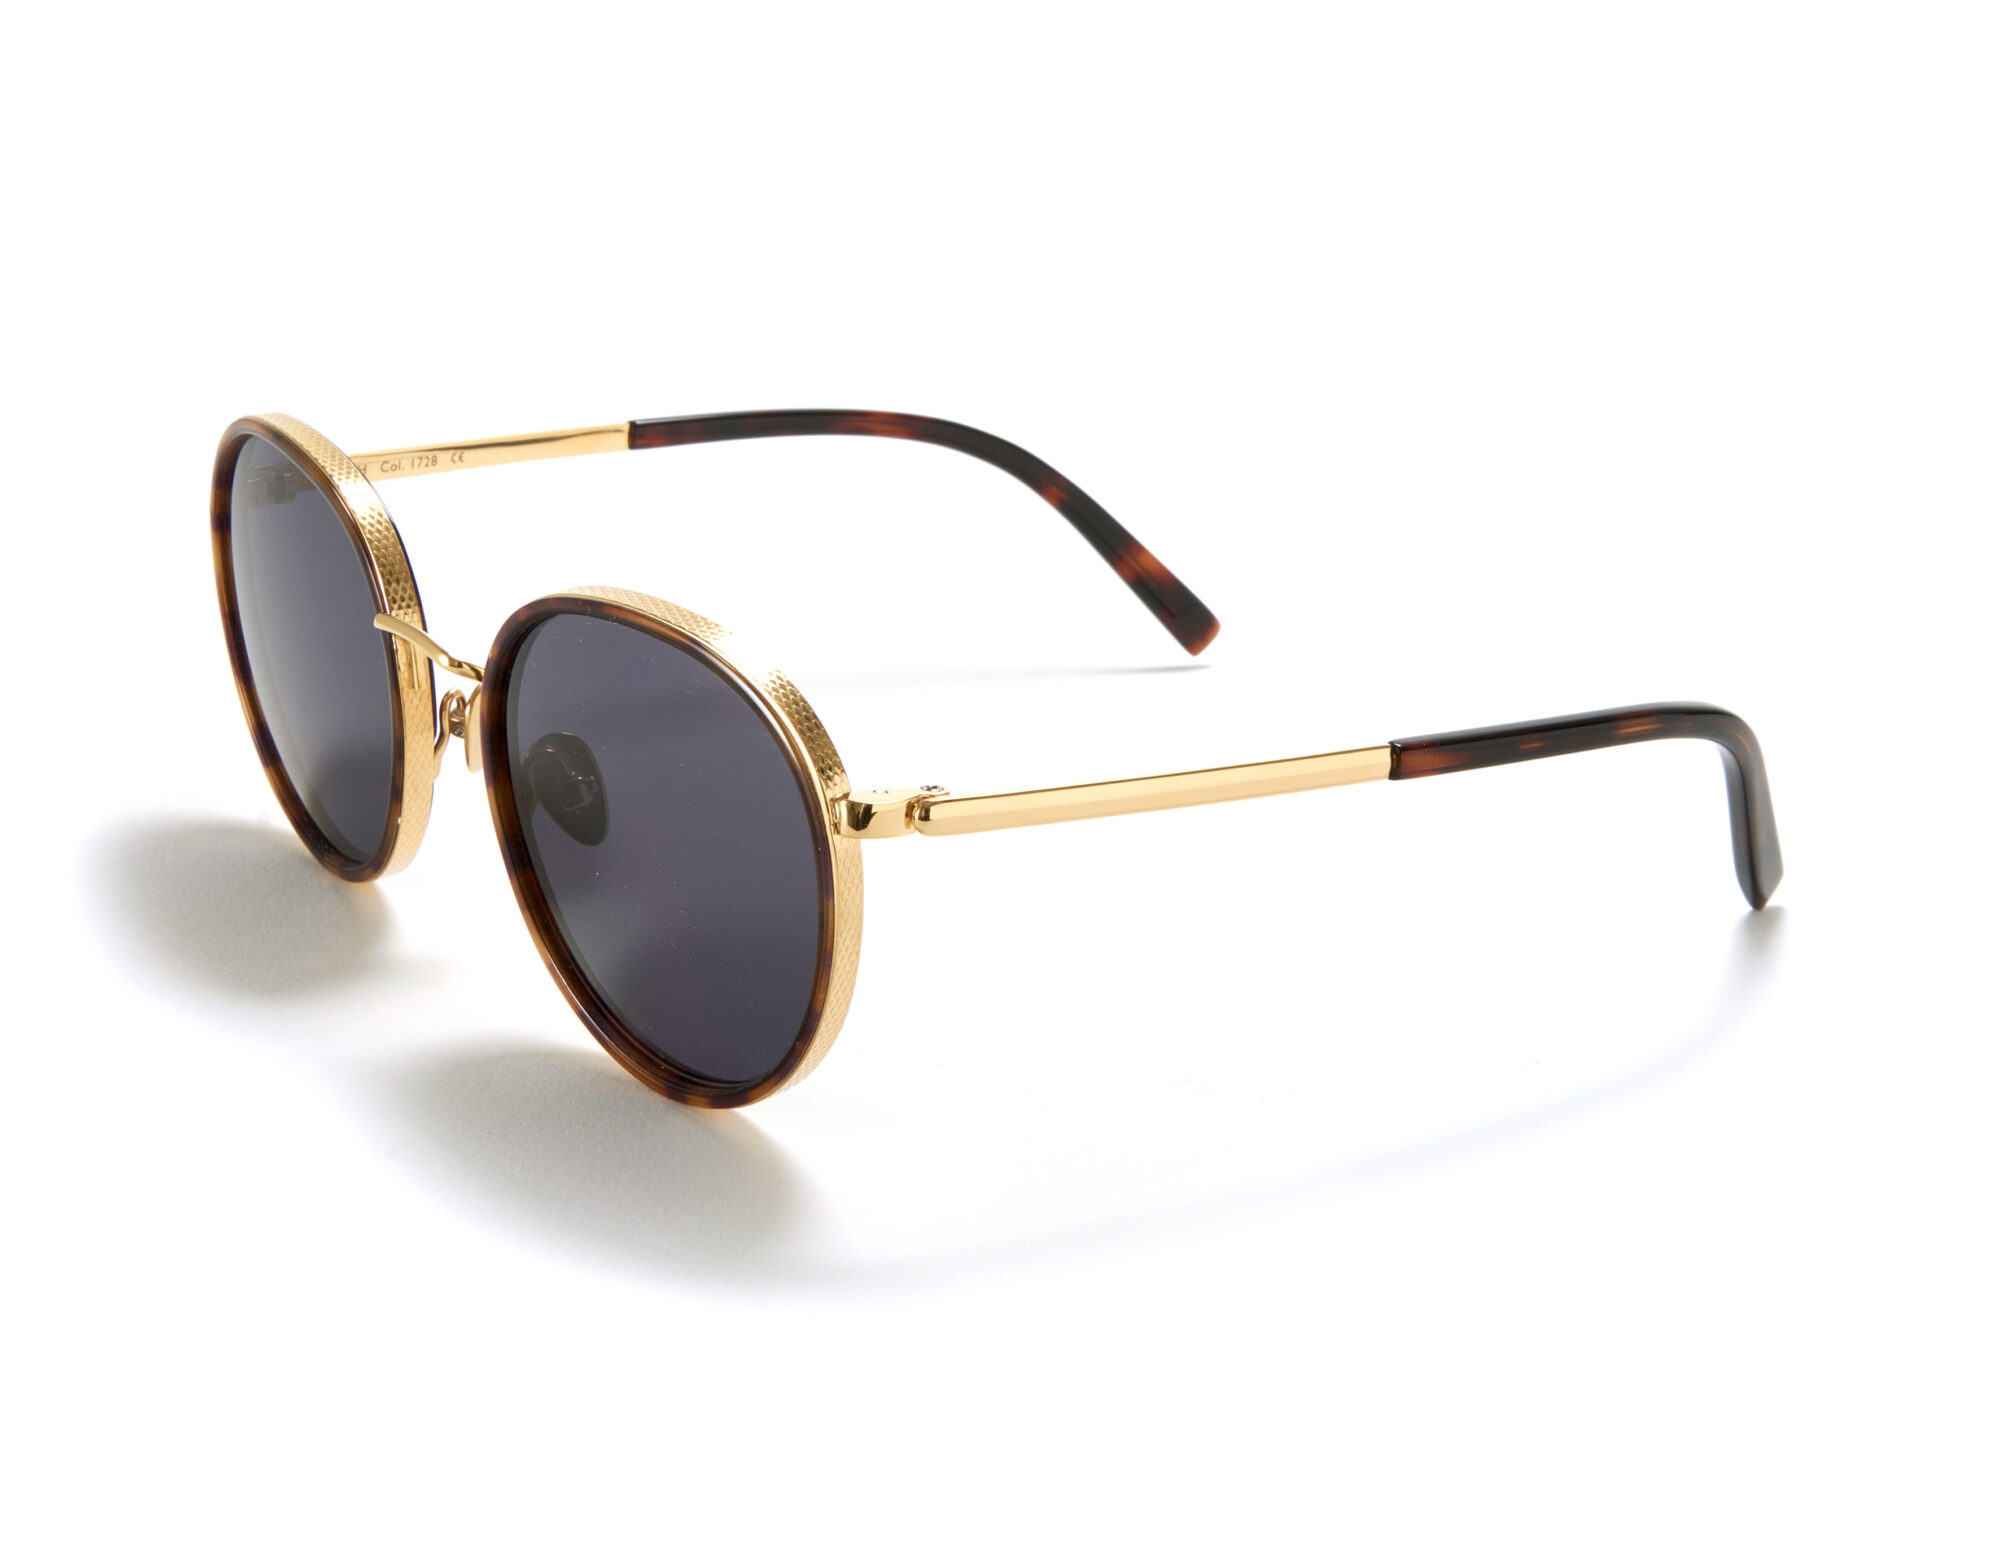 Buy ROYAL SON Men Wrap Around Polarized UV Protection Sunglasses Black Lens  (Medium)-CHI00109-C1 - Pack of 1 at Amazon.in